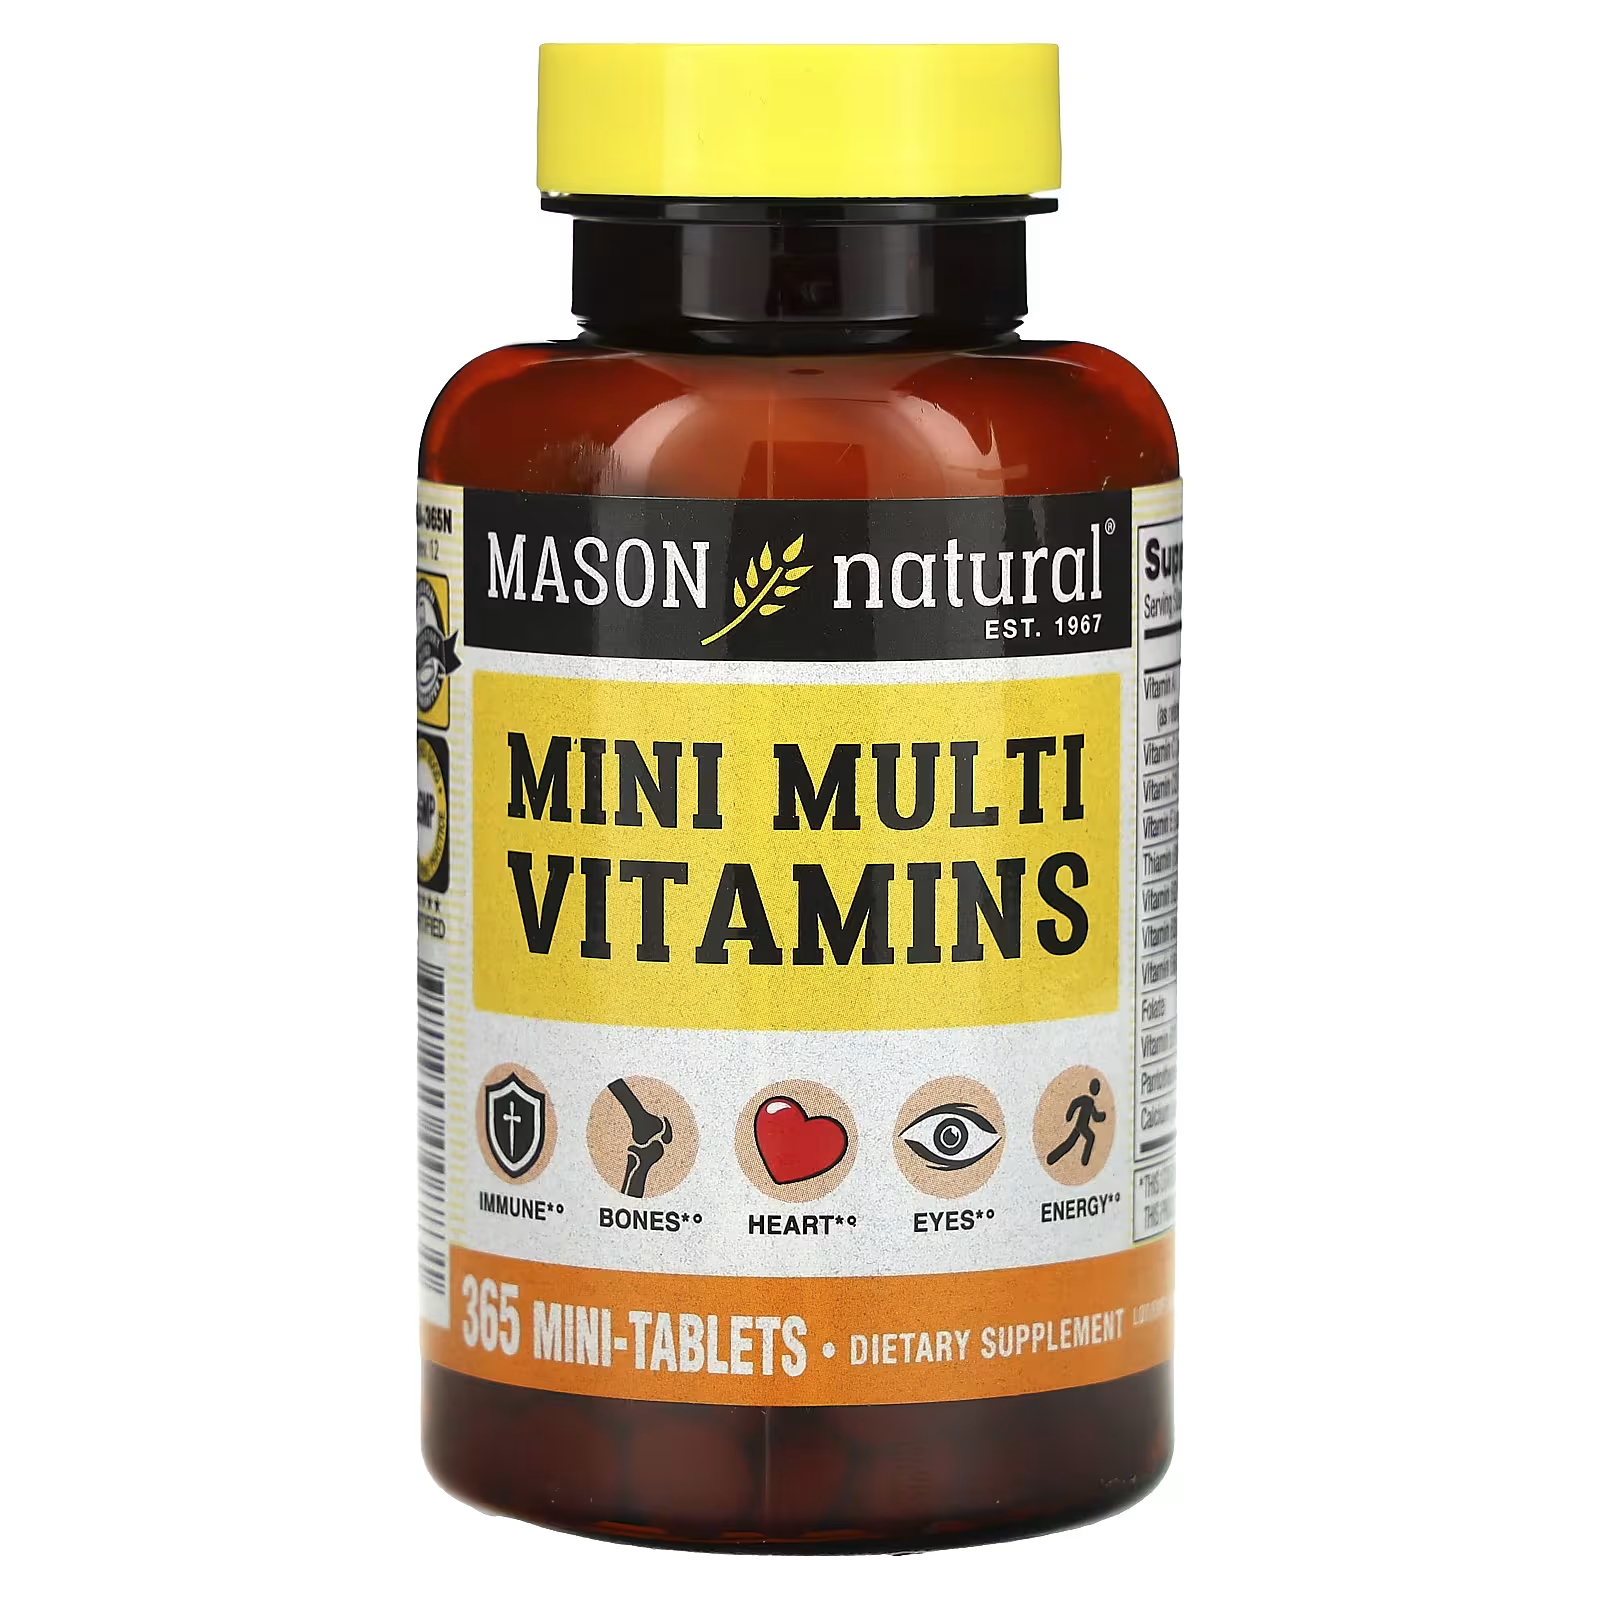 Mason Natural Mini Мультивитамины 365 мини-таблеток mason natural мультивитамины с железом 365 мини таблеток